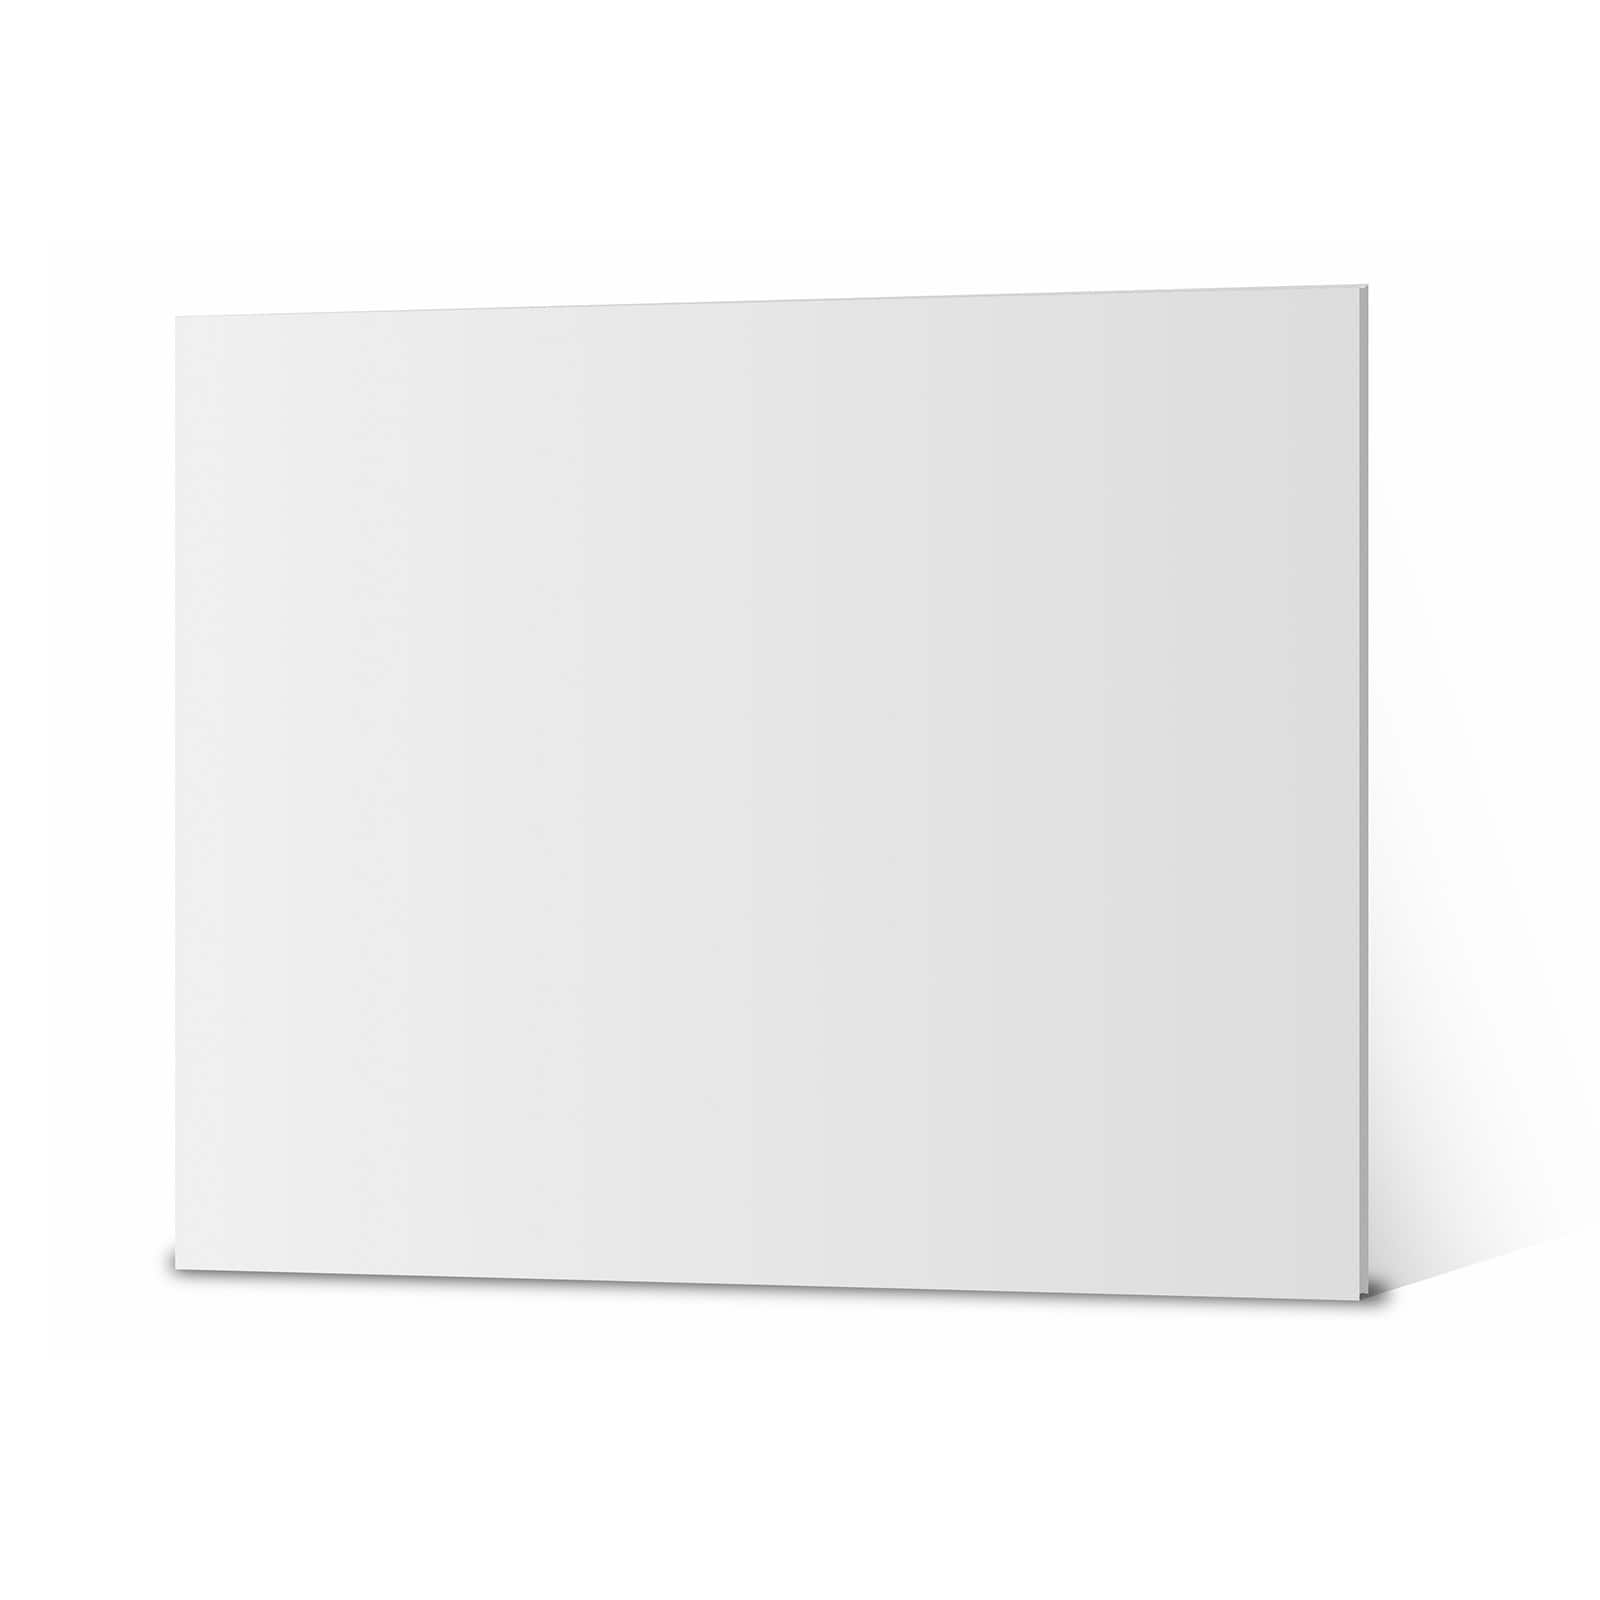 Framer Supply Regular White Foamboard 3/16in 24 x 36 25 Sheets 